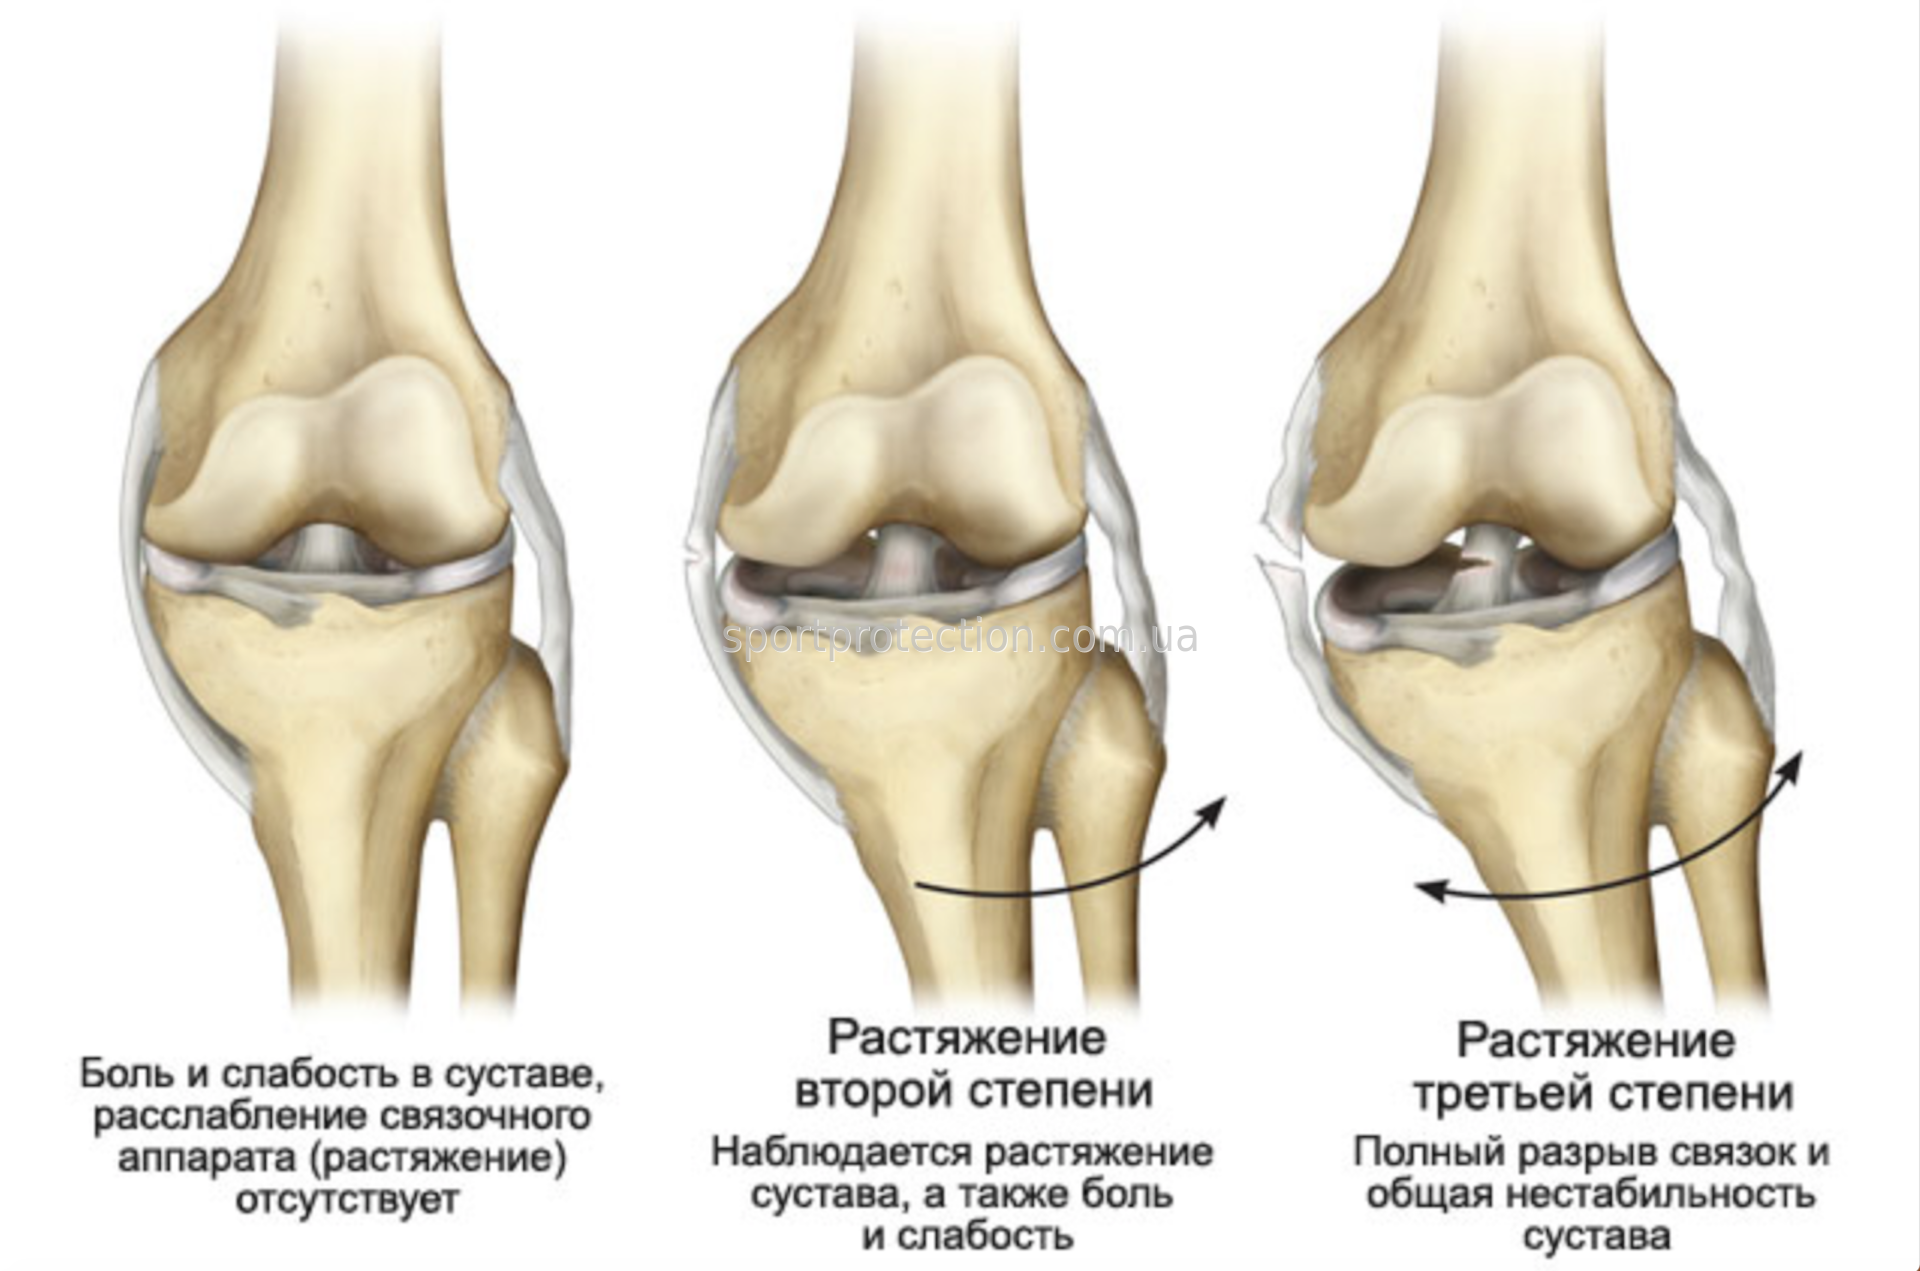 Ушиб повреждение связок колена. Диагностика повреждений боковых связок коленного сустава. Степени повреждения коленного сустава. Степени разрыва боковой связки коленного сустава.